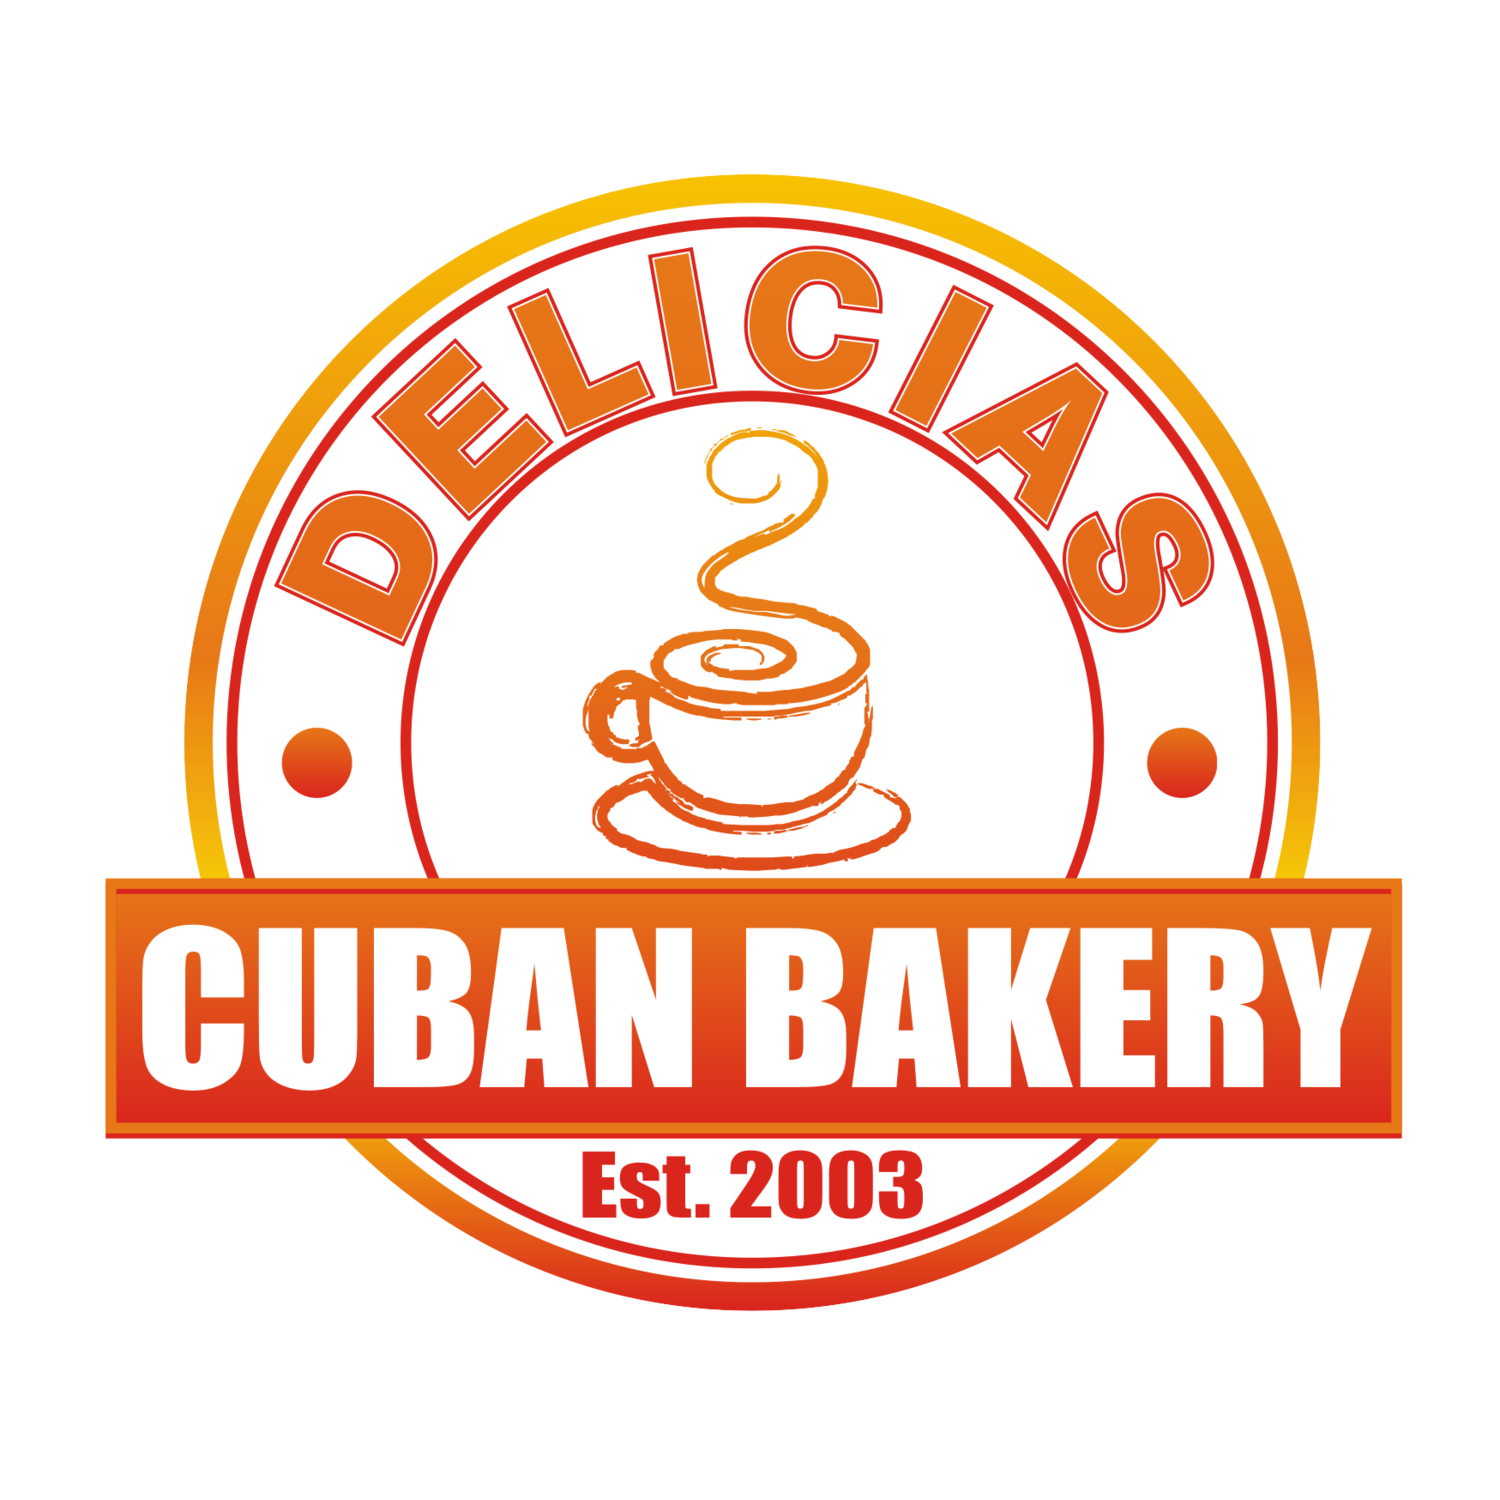 Delicias Cuban Bakery - Lake Worth, FL 33460 - (561)582-2500 | ShowMeLocal.com